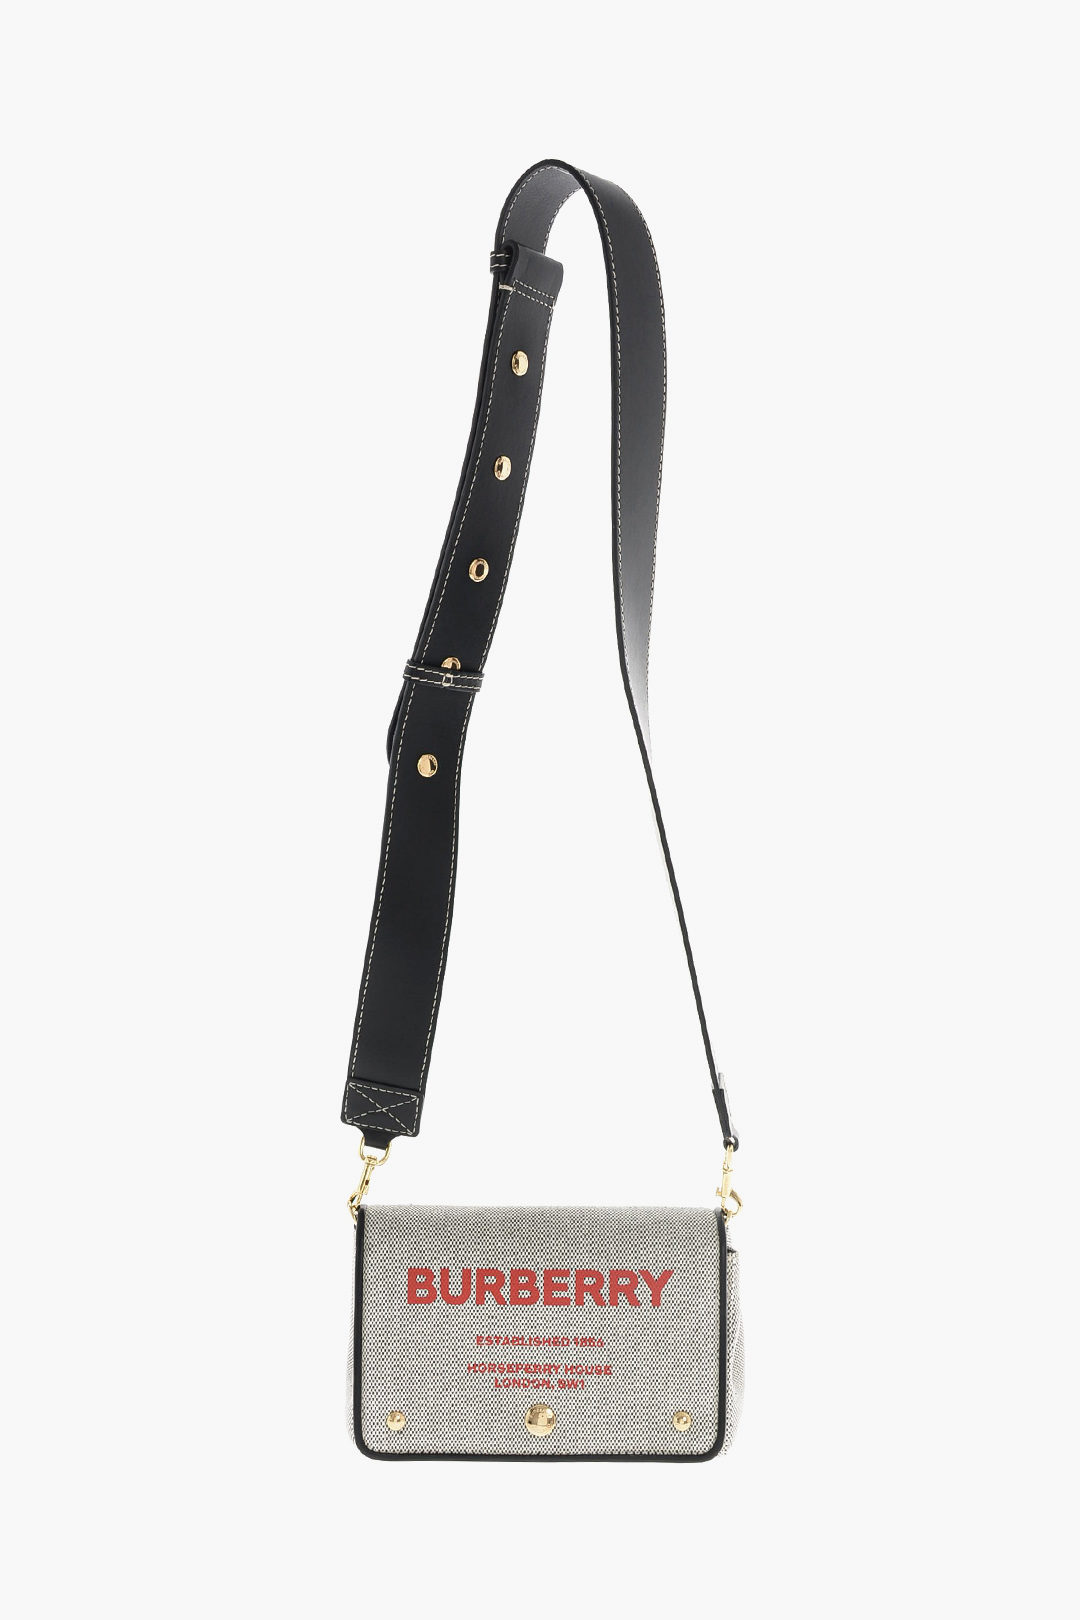 Burberry Canvas HACKBERRY HORSEFERRY Crossbody Bag women - Glamood Outlet